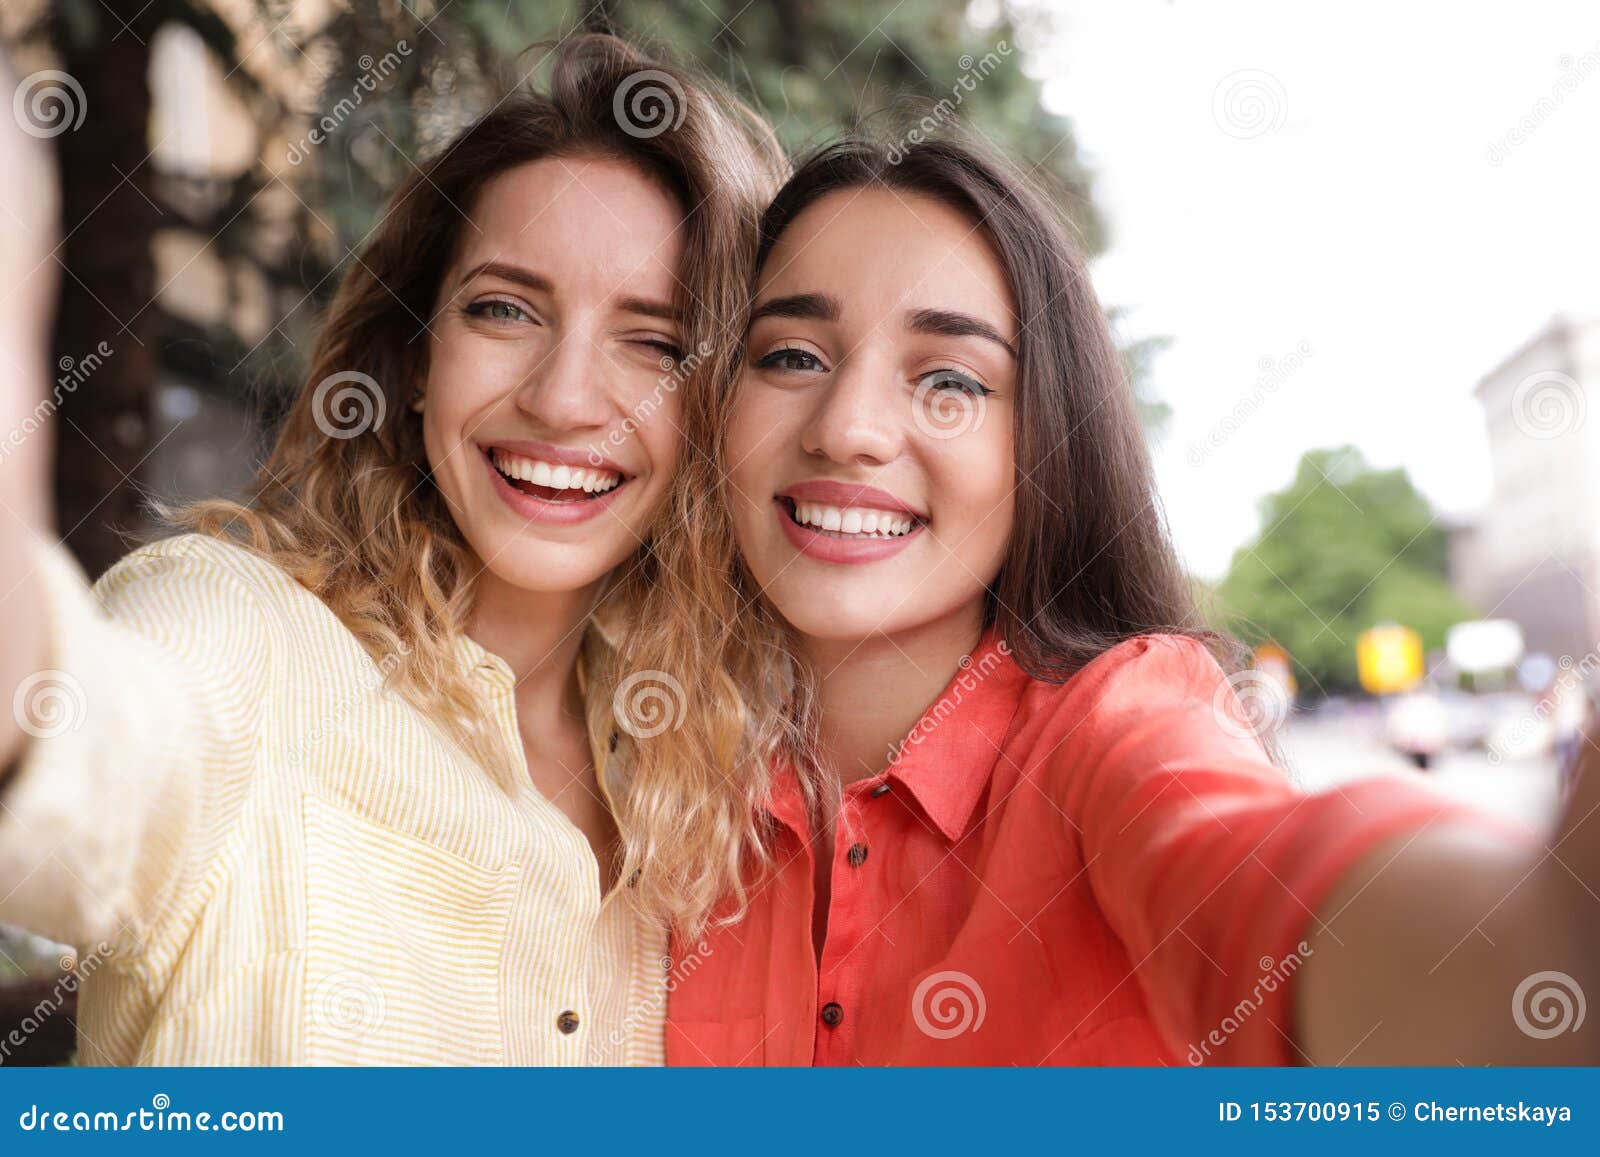 Beautiful Young Women Taking Selfie Outdoors Stock Image - Image of ...